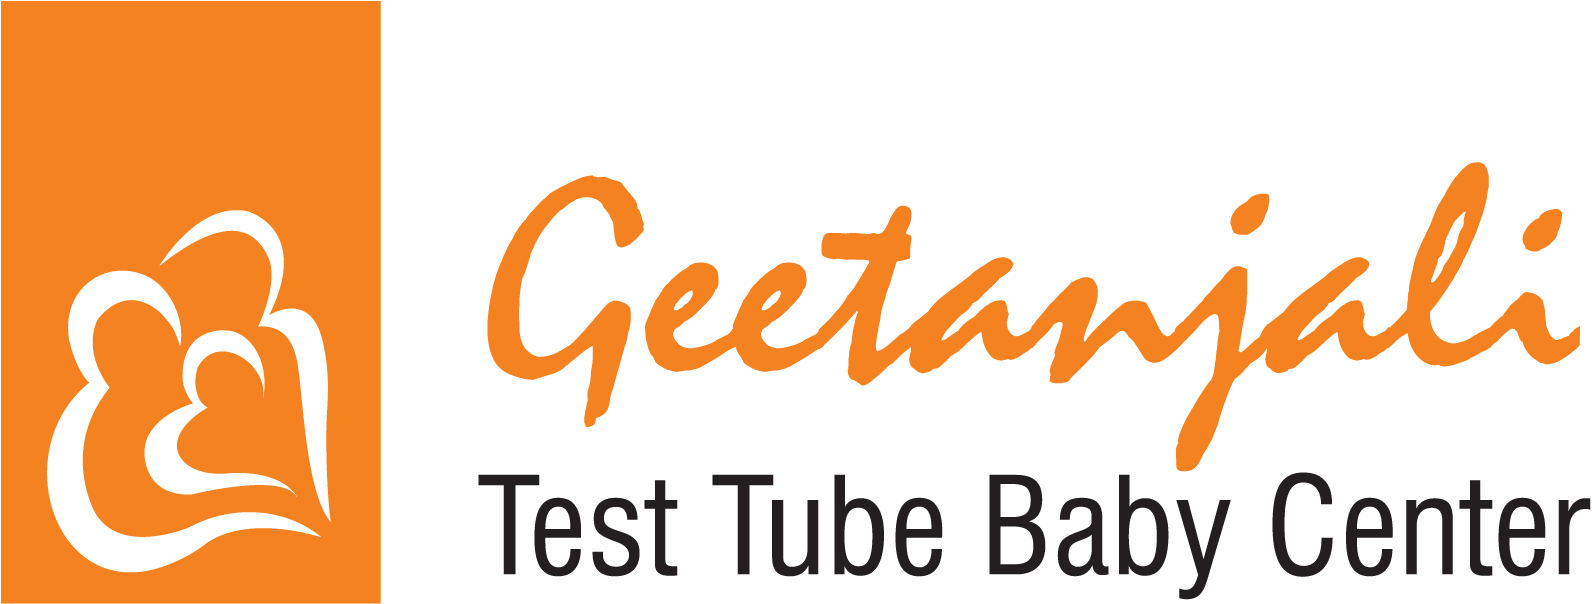 Geetanjali Test Tube Baby Centre Hyderabad